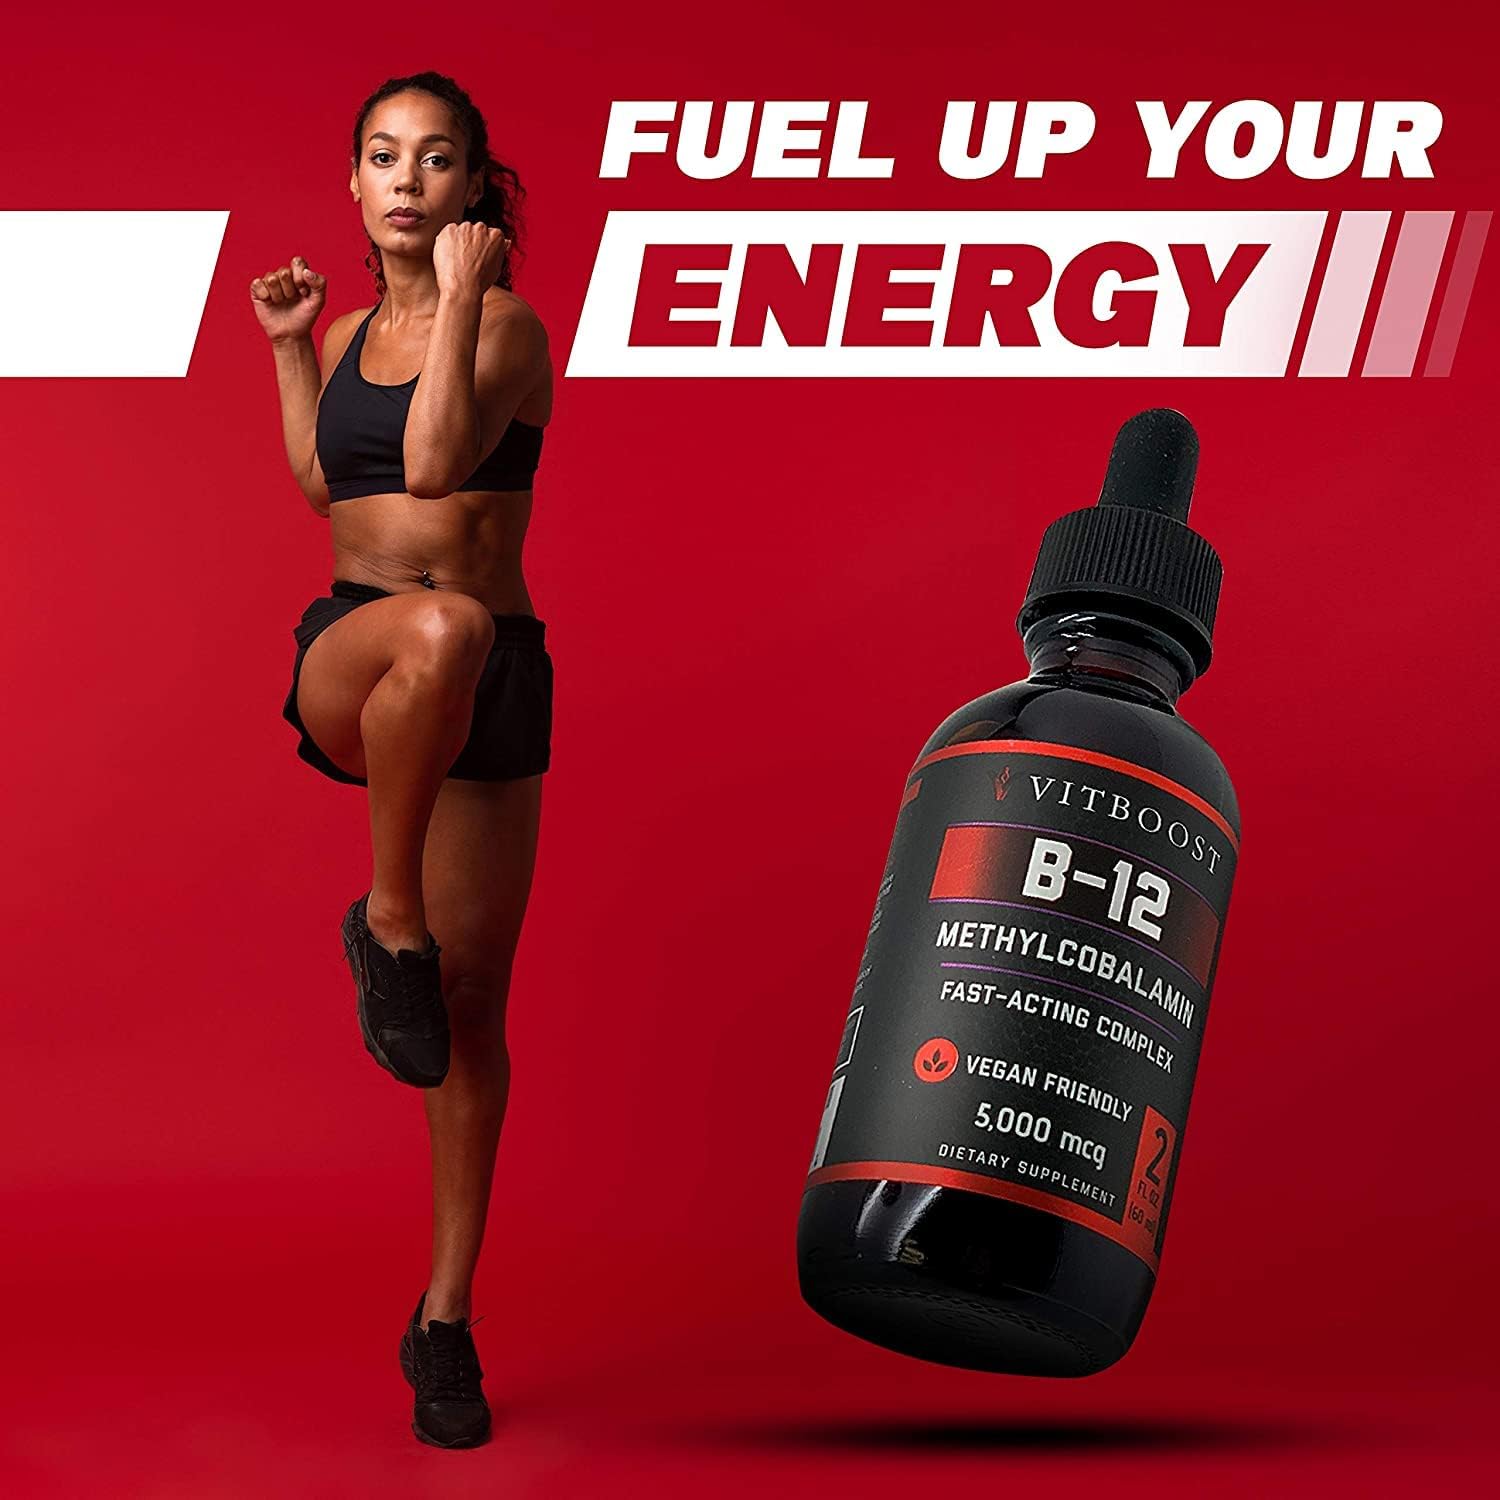 VITBOOST Vegan Liquid B-12 Drops – 60 x 5000 mcg Extra Strength Raspberry Flavored Vitamin B12 Liquid Methylcobalamin sublingual Supplement | Designed to Maximize Absorption  Energy | Gluten Free